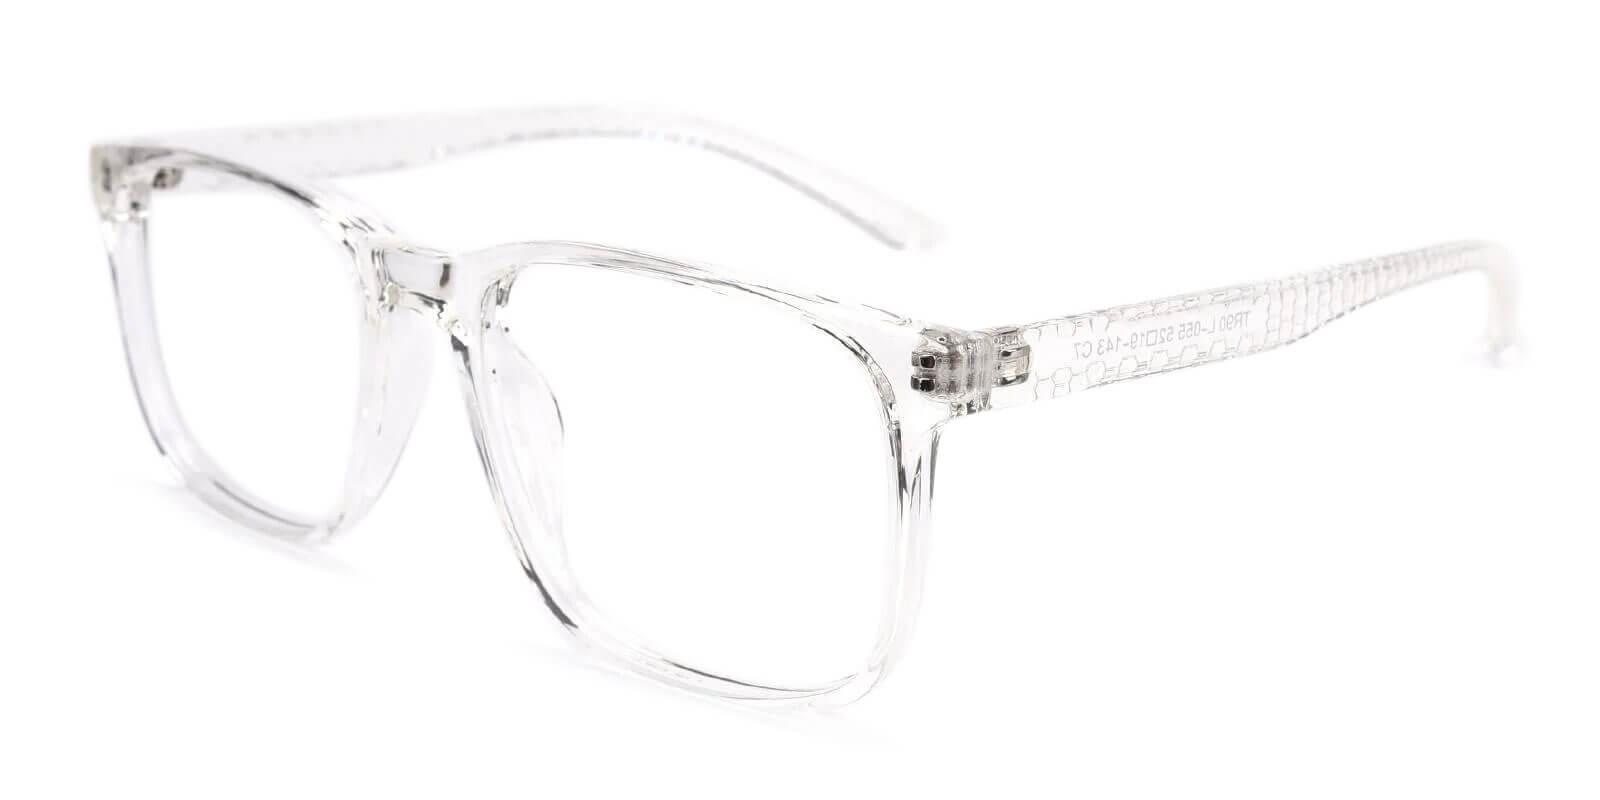 Machel Translucent TR Eyeglasses , UniversalBridgeFit Frames from ABBE Glasses